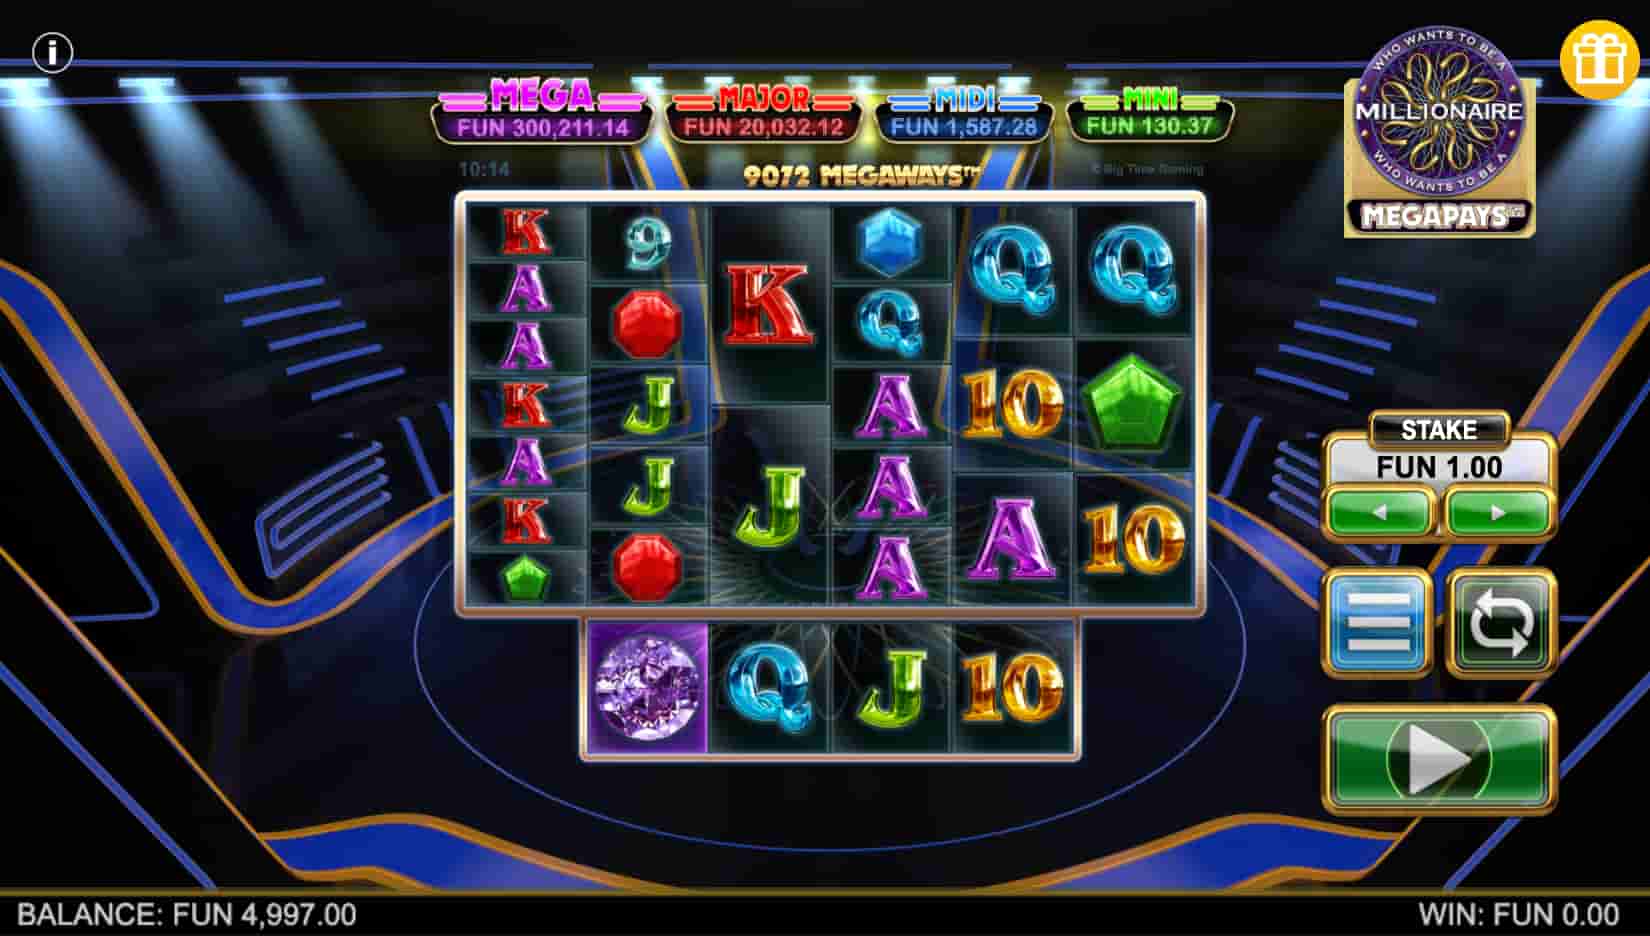 Millionaire Megapays screenshot 3